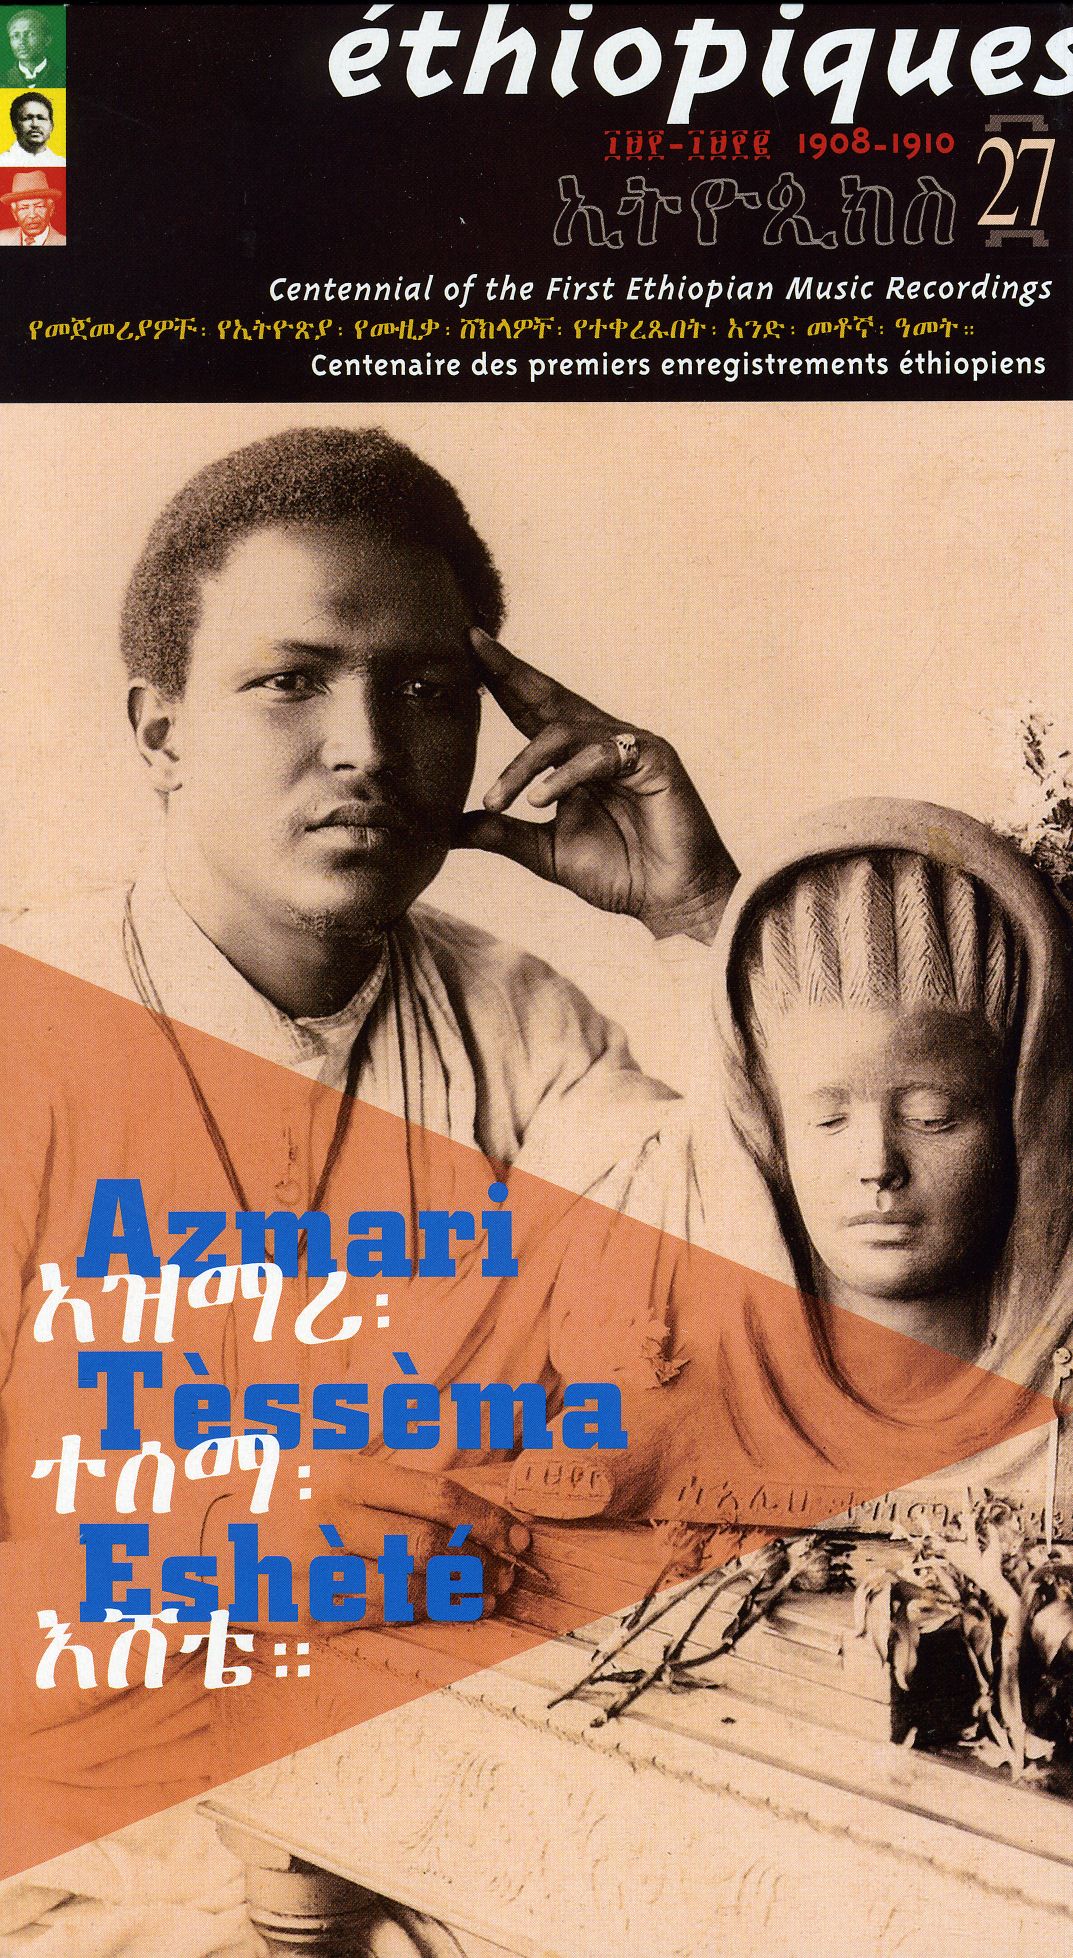 ETHIOPIQUES 27: CENTENNIAL OF THE FIRST ETHIOPIAN